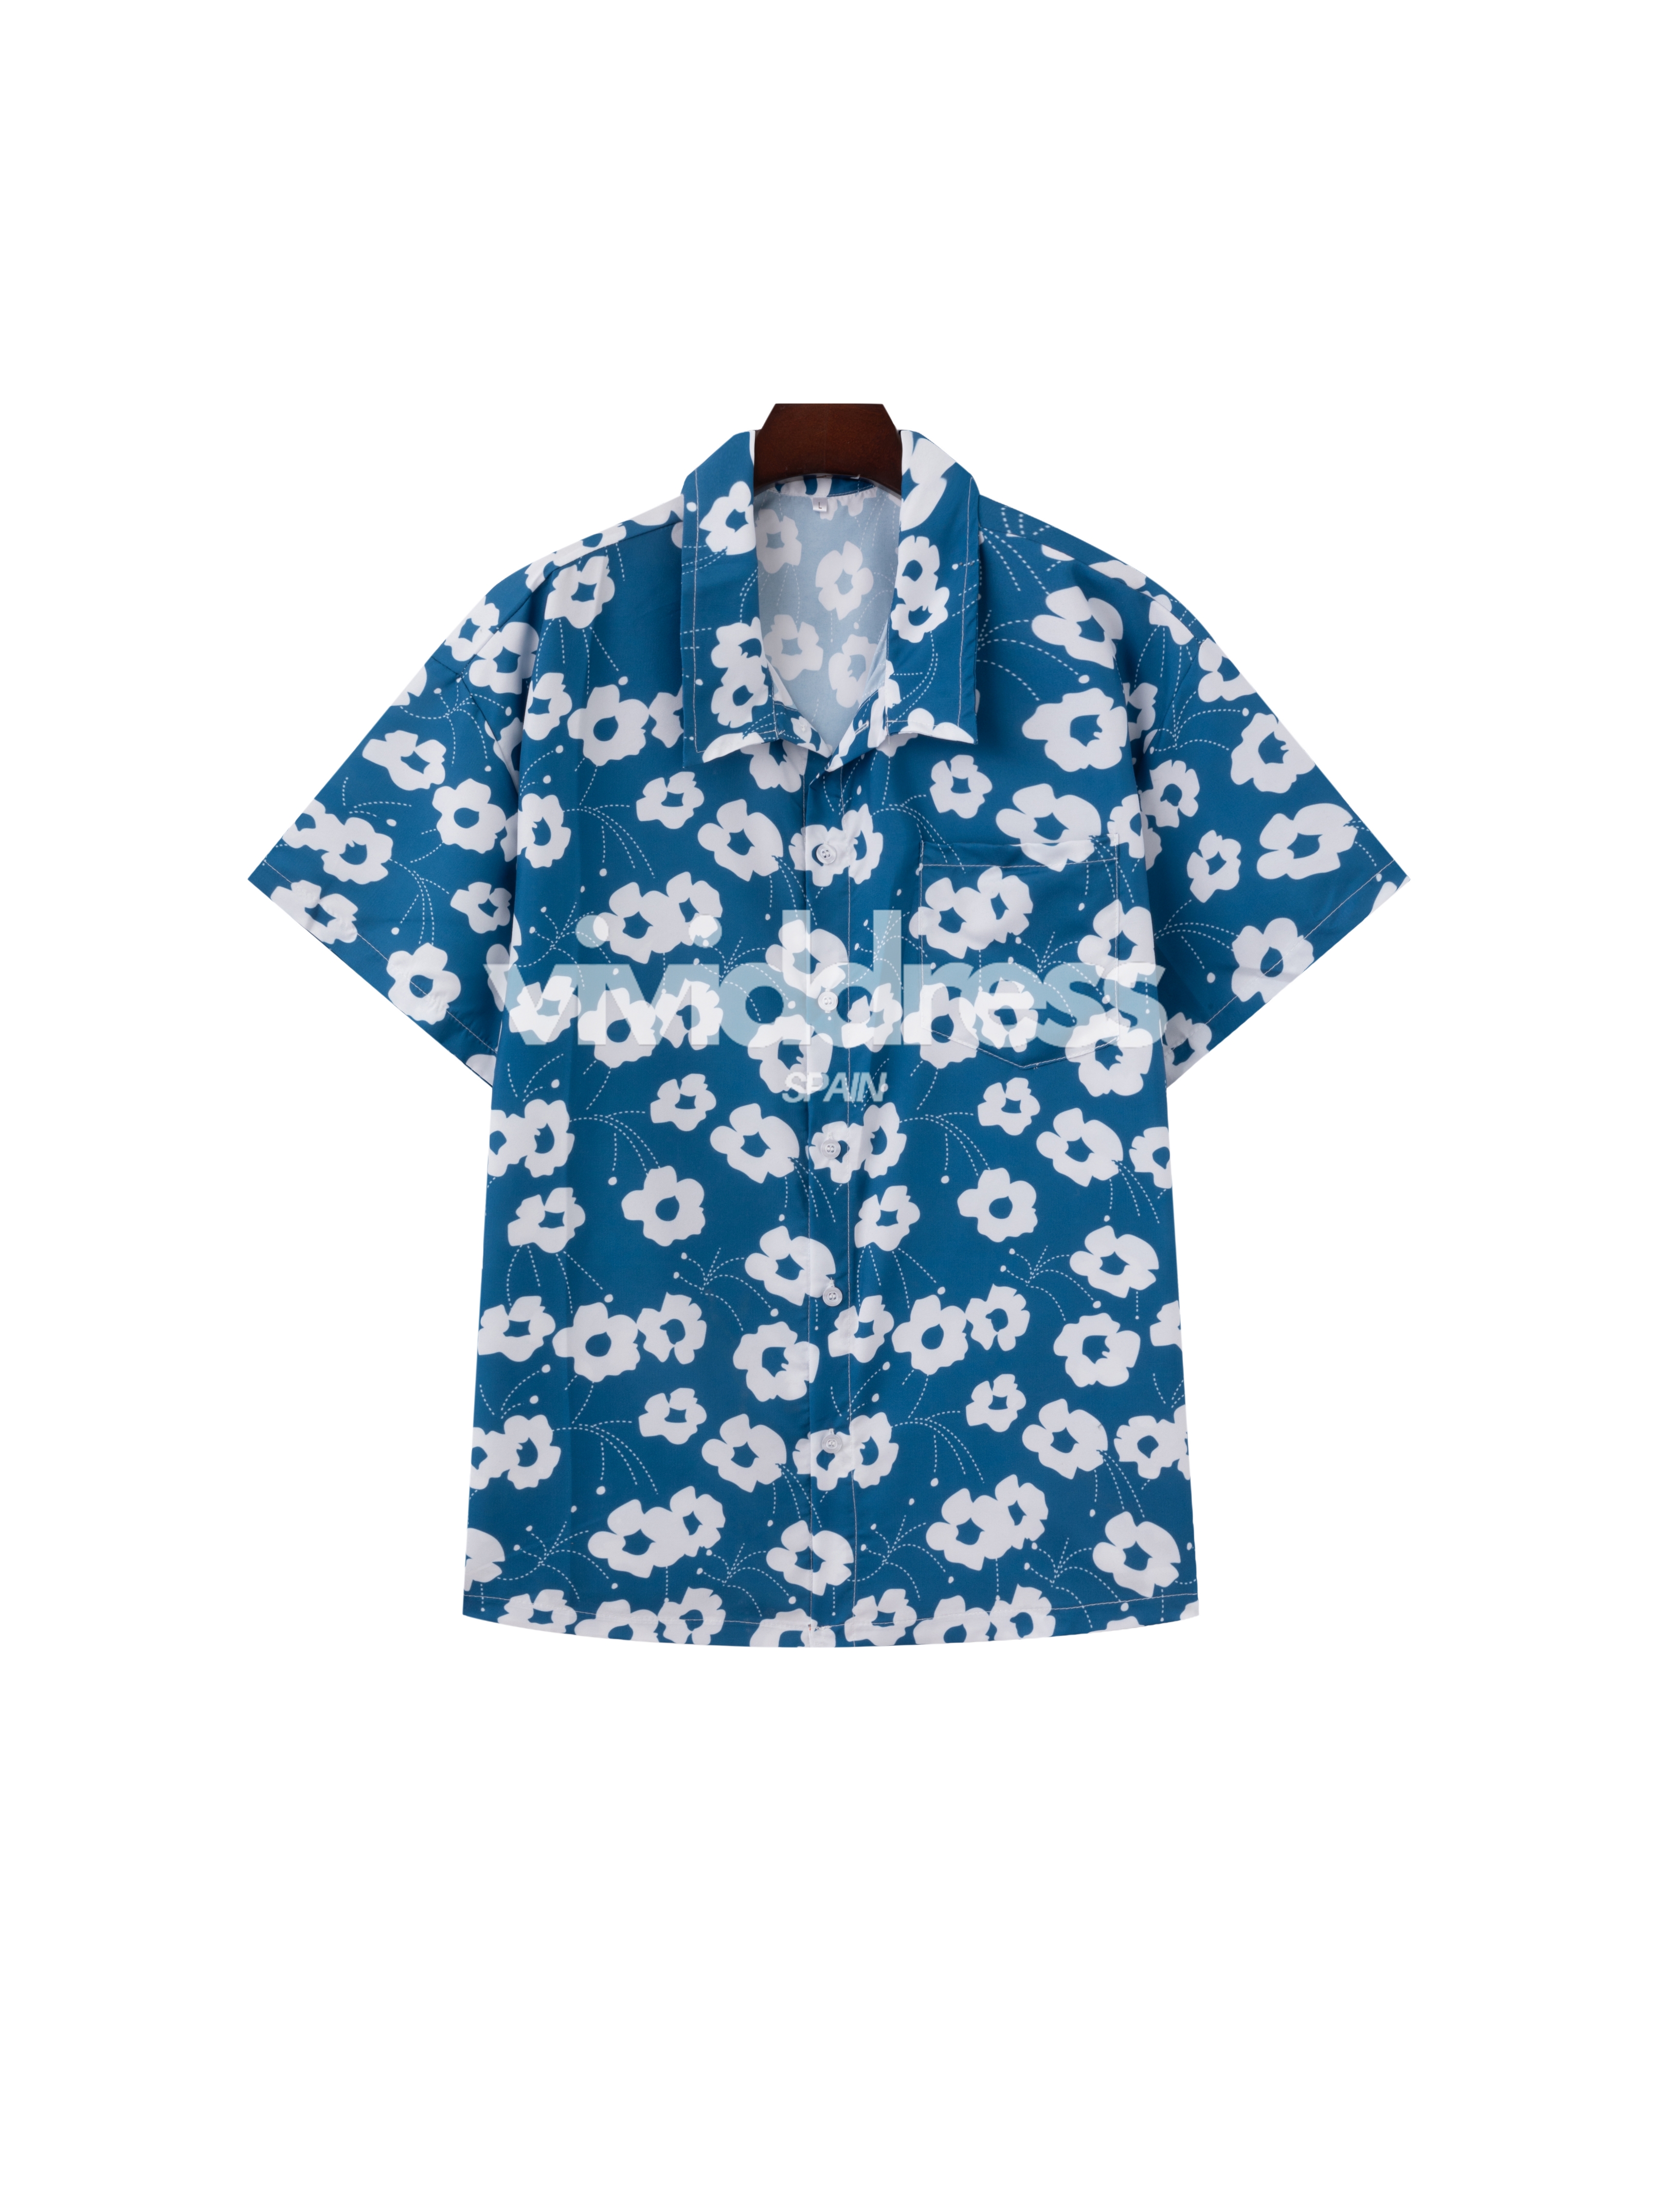 Men's Floral Print Blue Hawaiian Holiday Short Sleeve Shirt